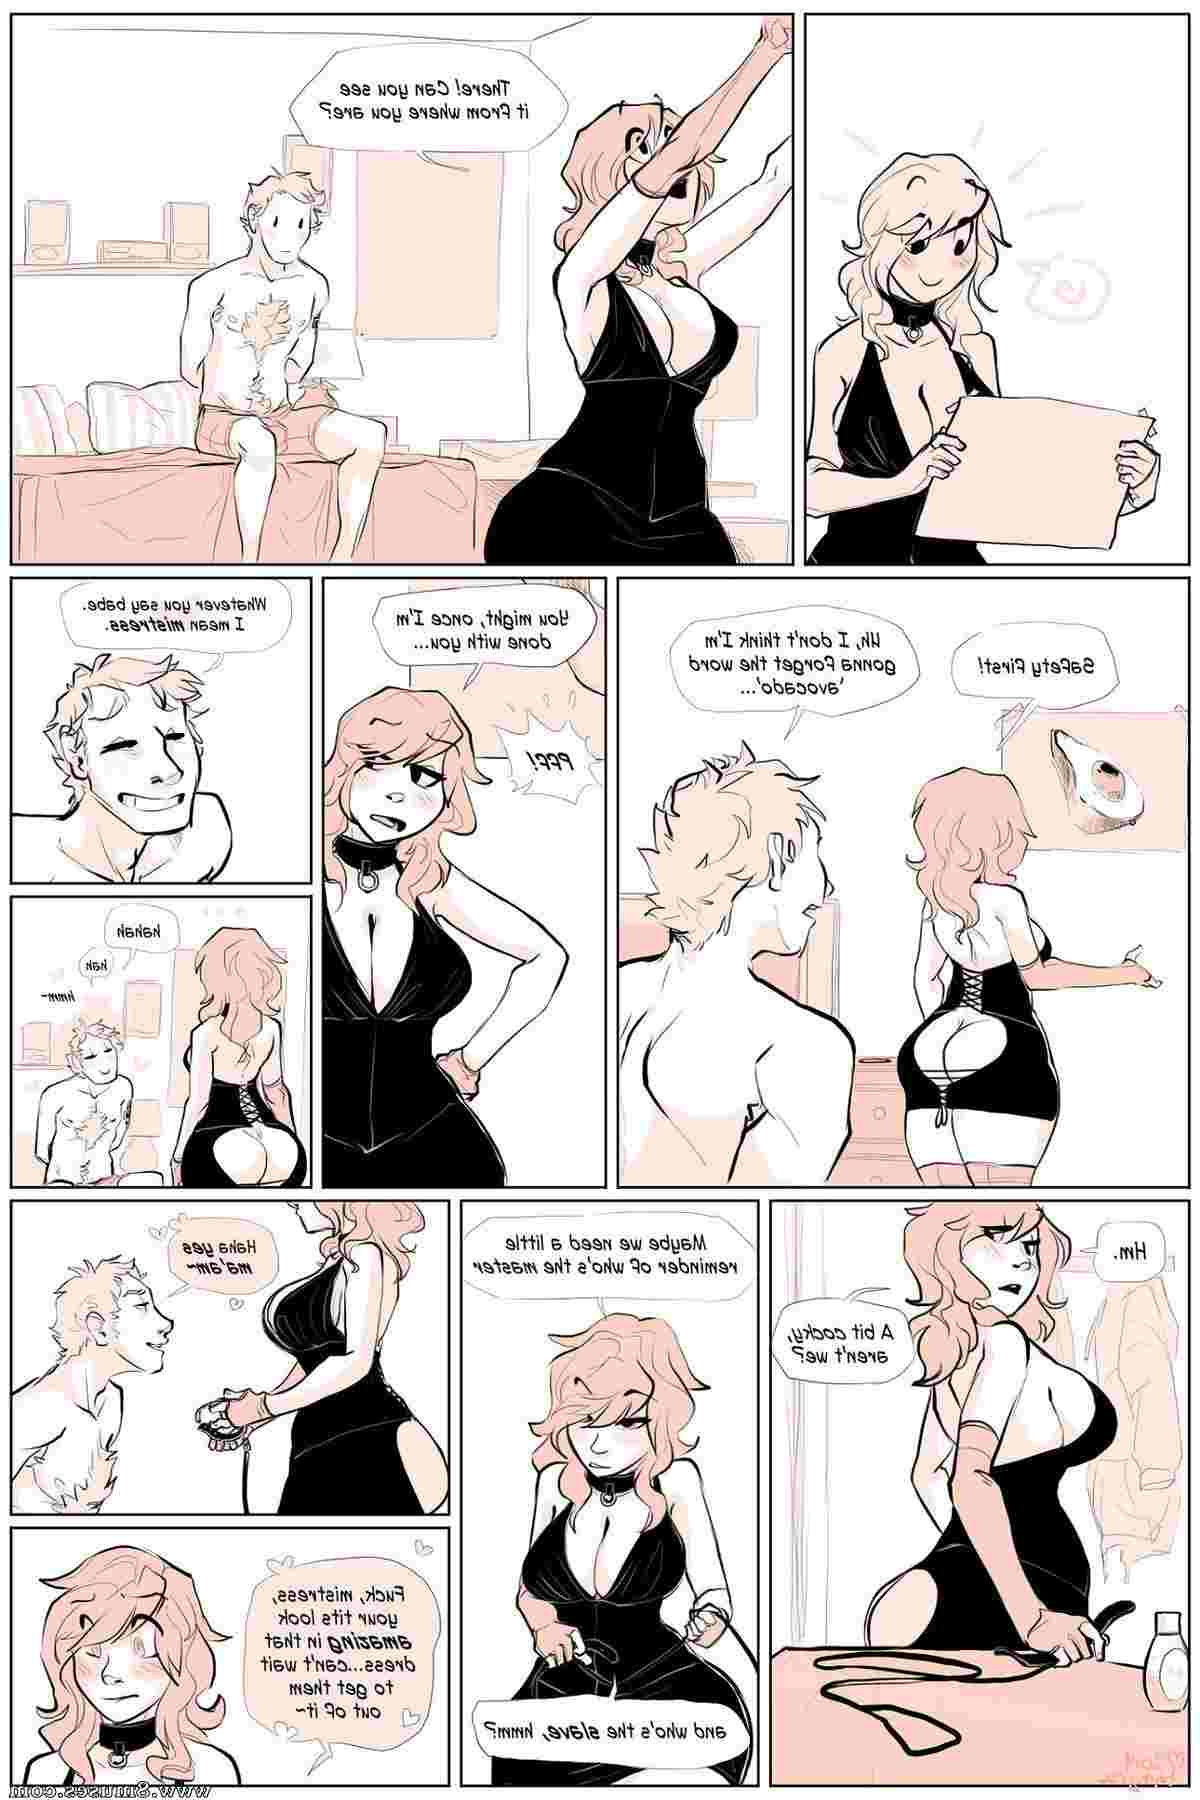 Slipshine-Comics/Neapolitan Neapolitan__8muses_-_Sex_and_Porn_Comics_77.jpg